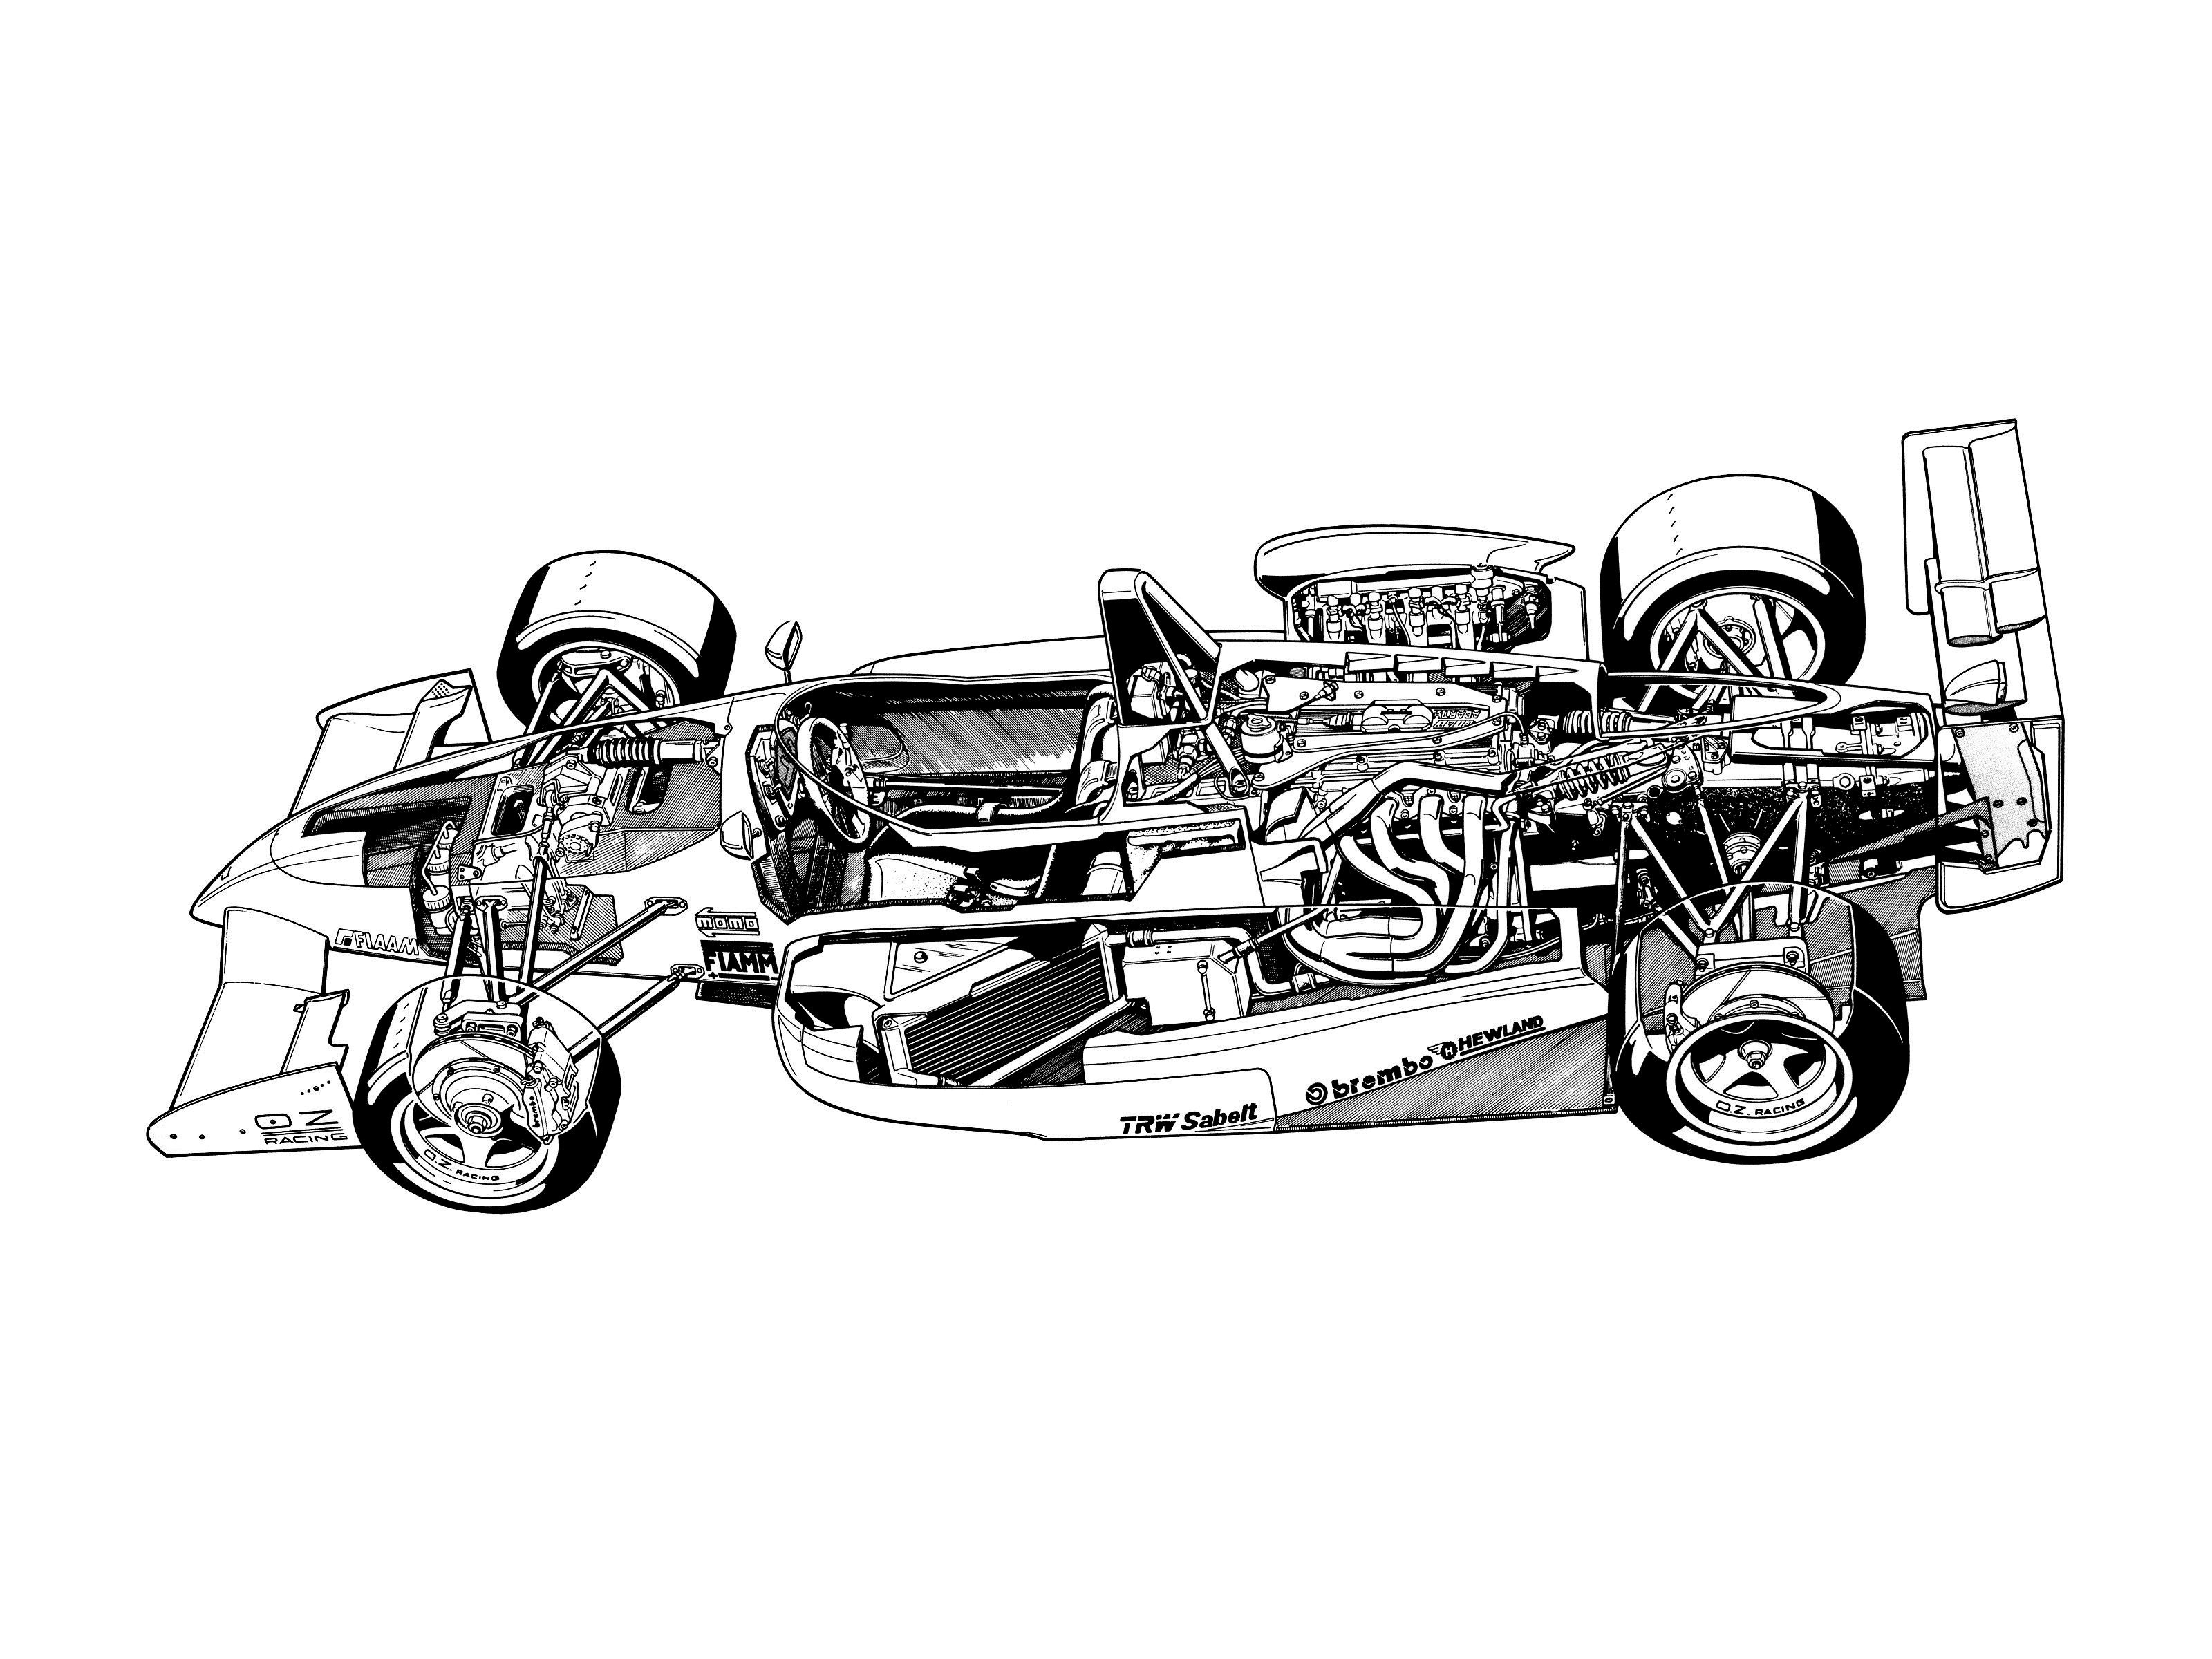 Dallara F395 cutaway drawing